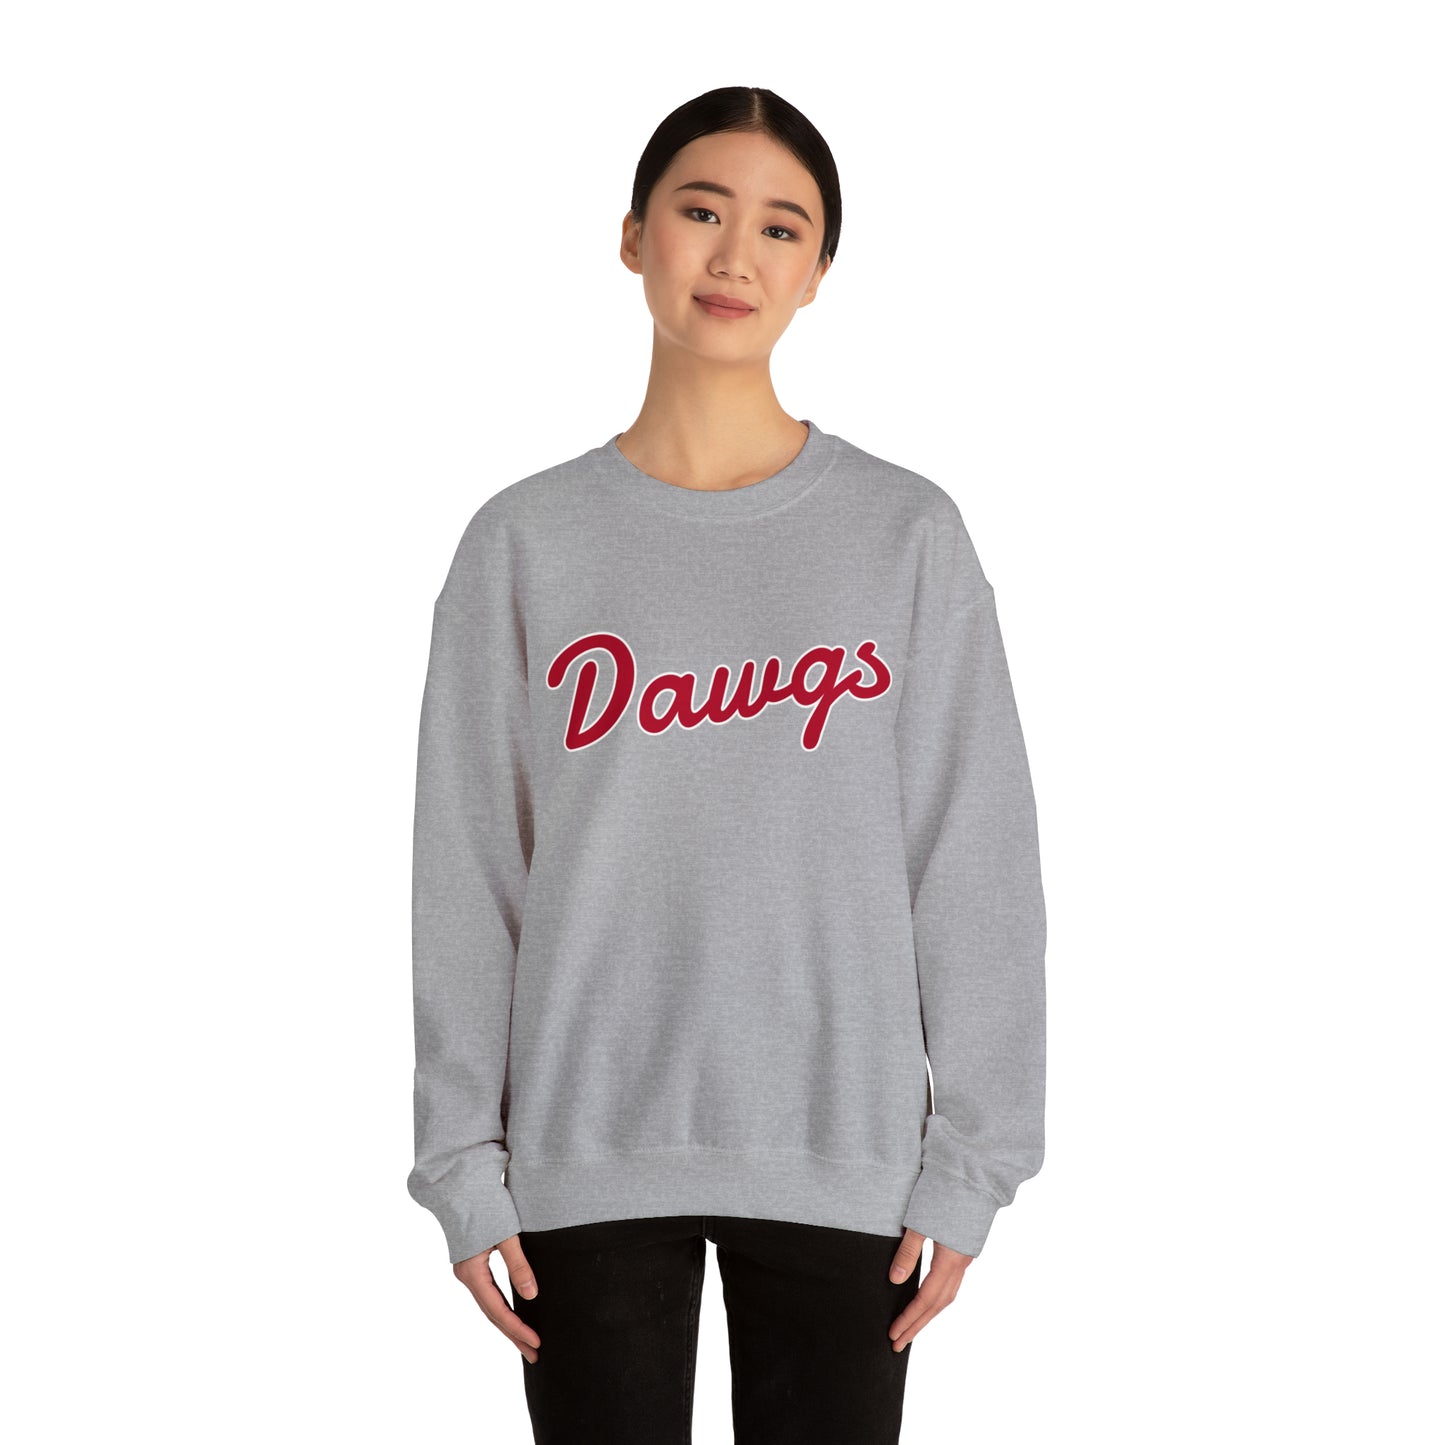 Georgia Dawgs Sweatshirt - Cursive